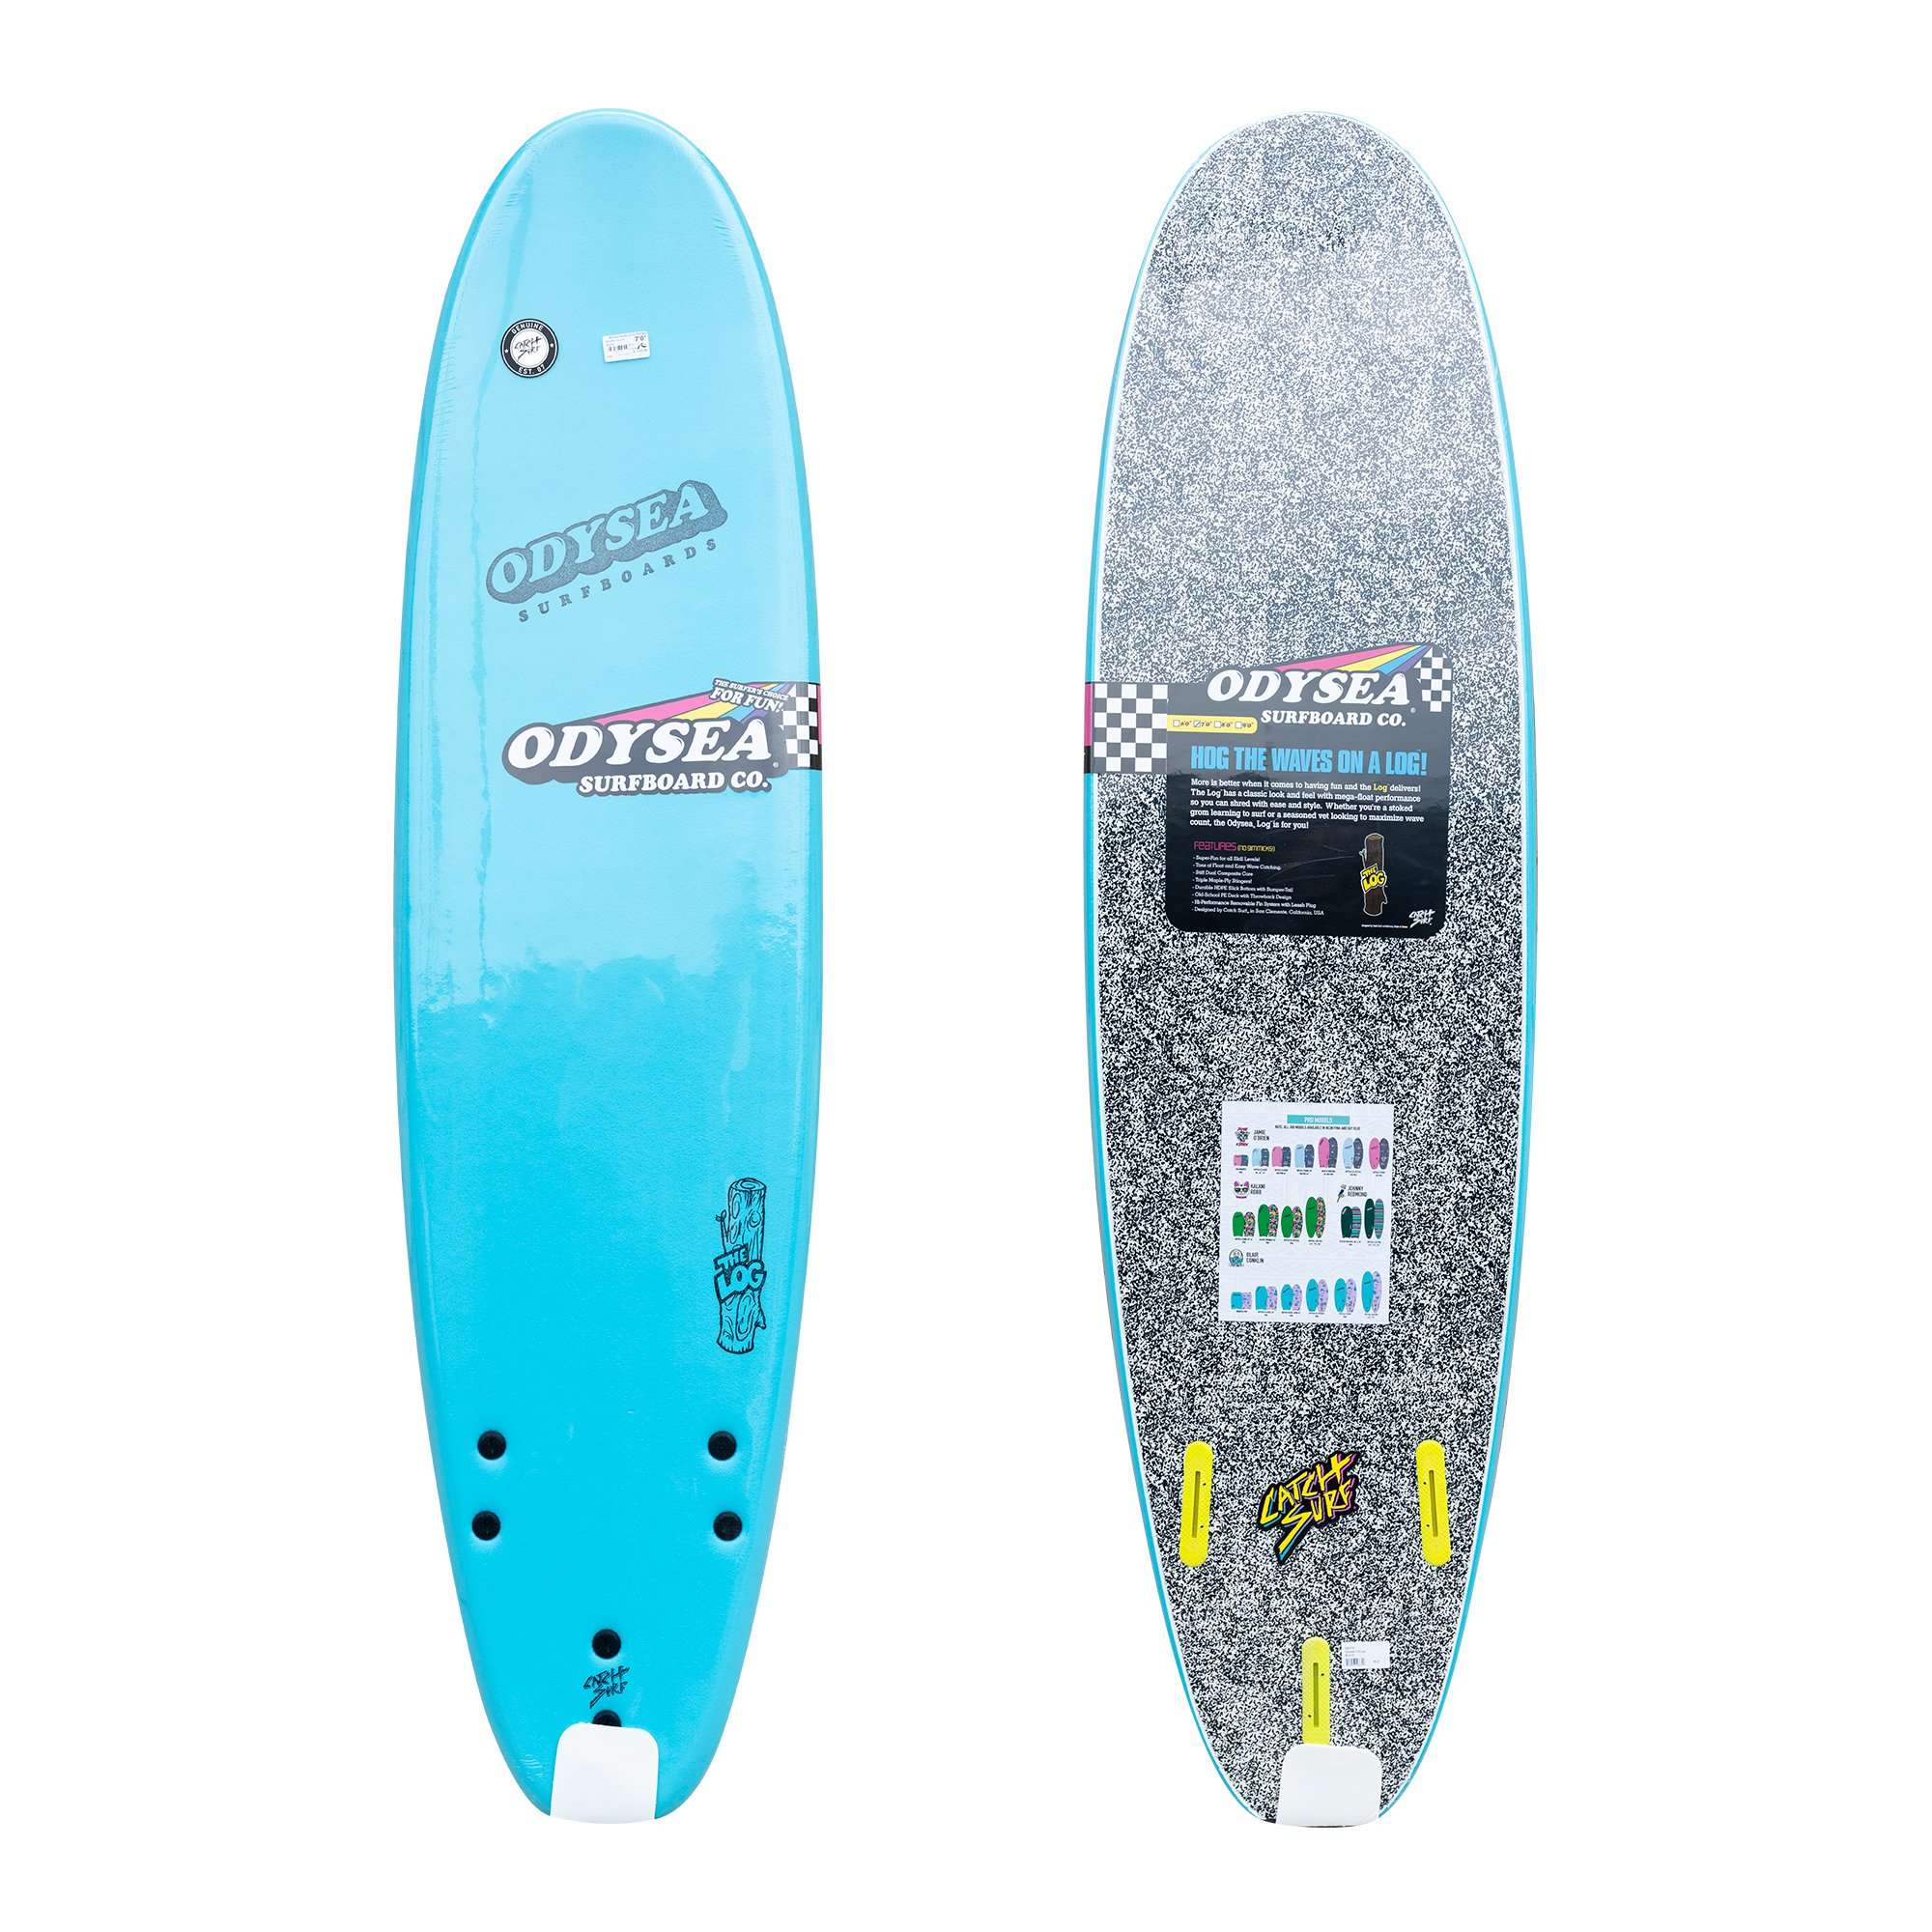 Odysea Soft Top Surfboard